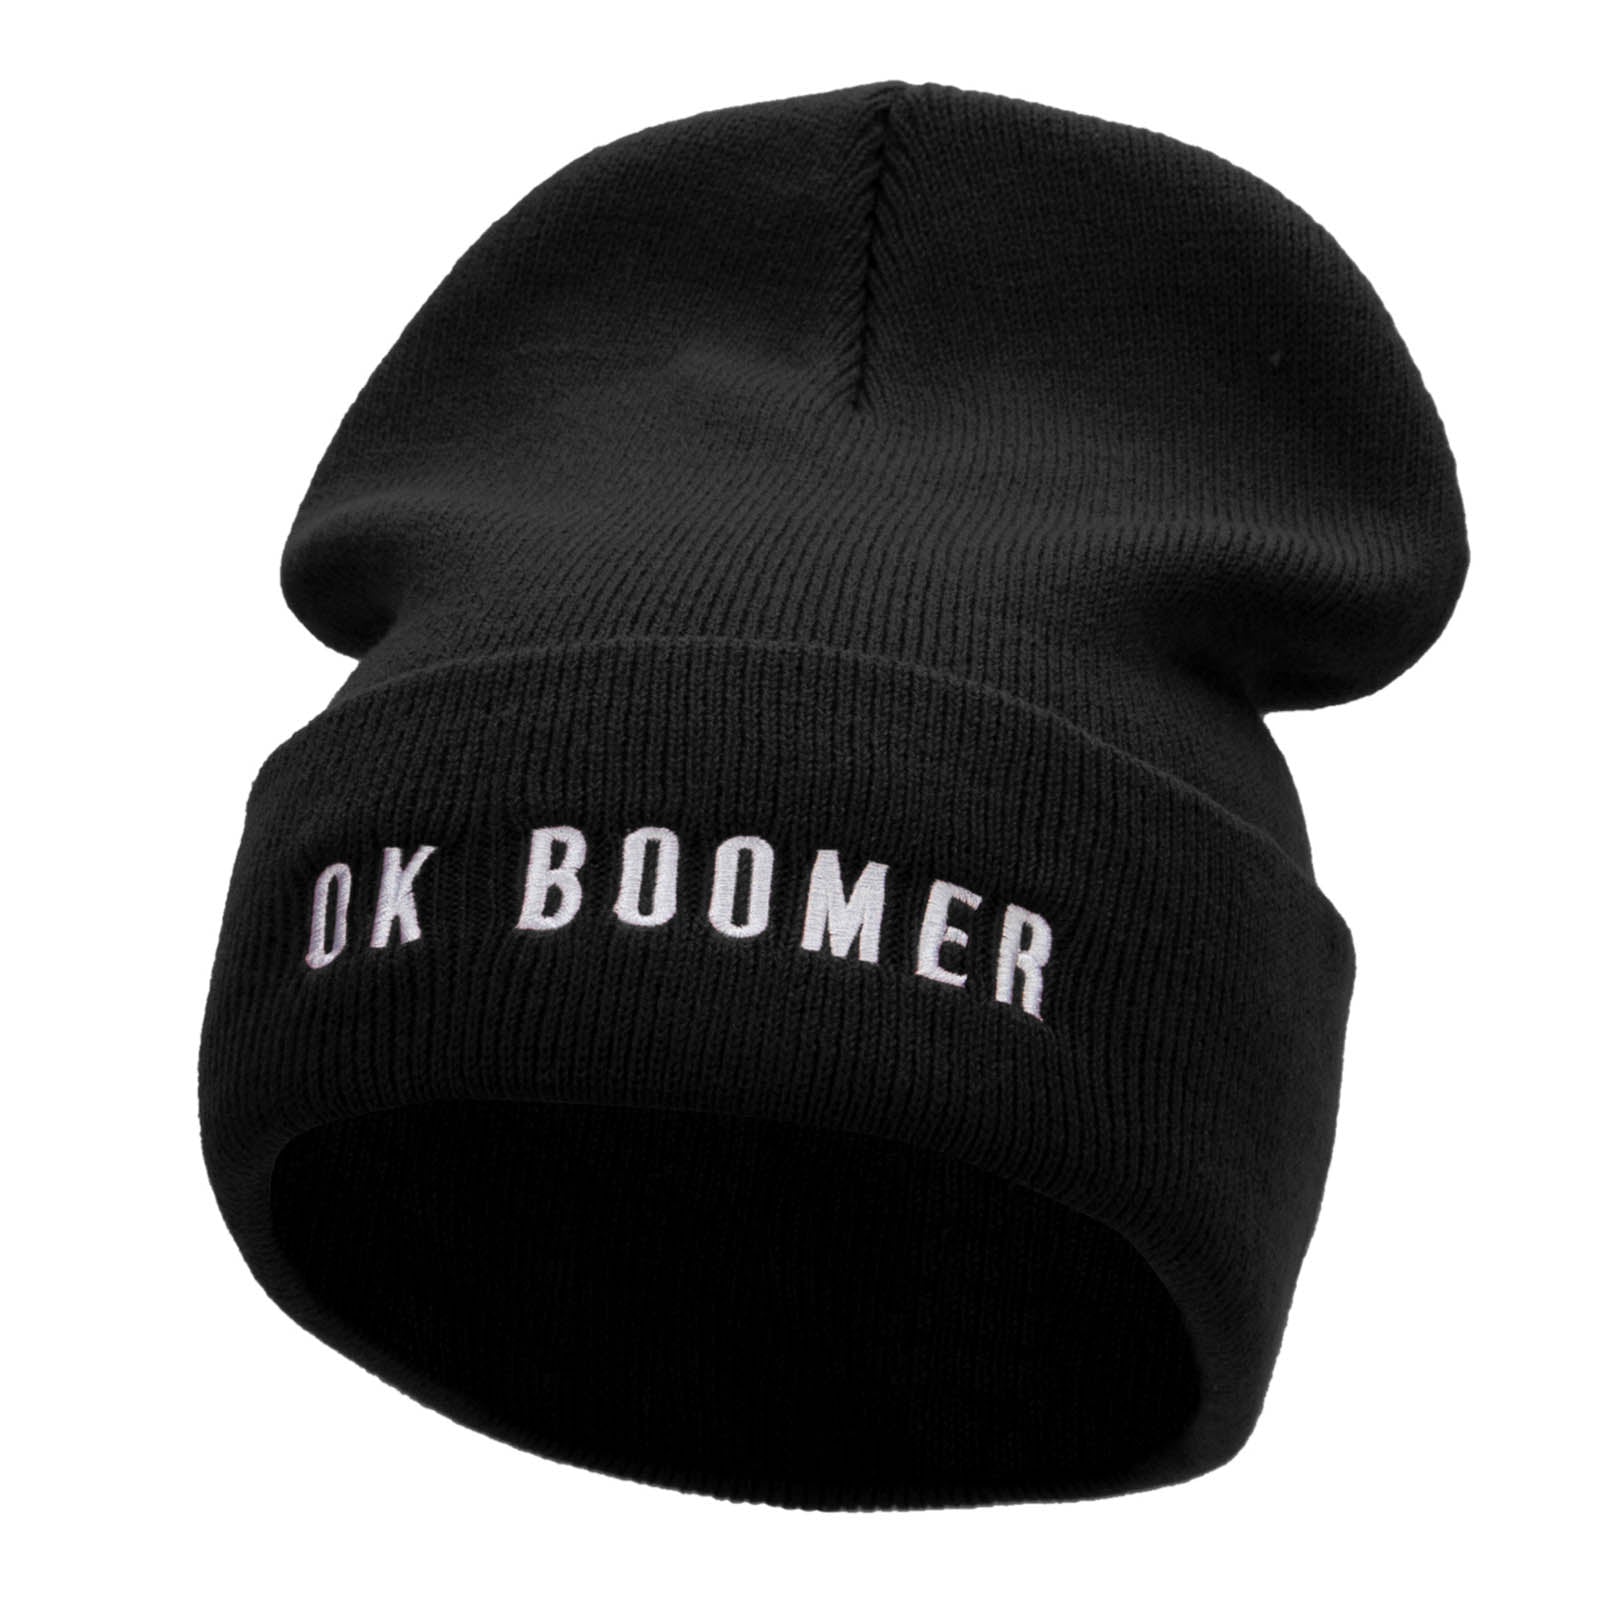 OK BOOMER Embroidered 12 Inch Long Knitted Beanie - Black OSFM